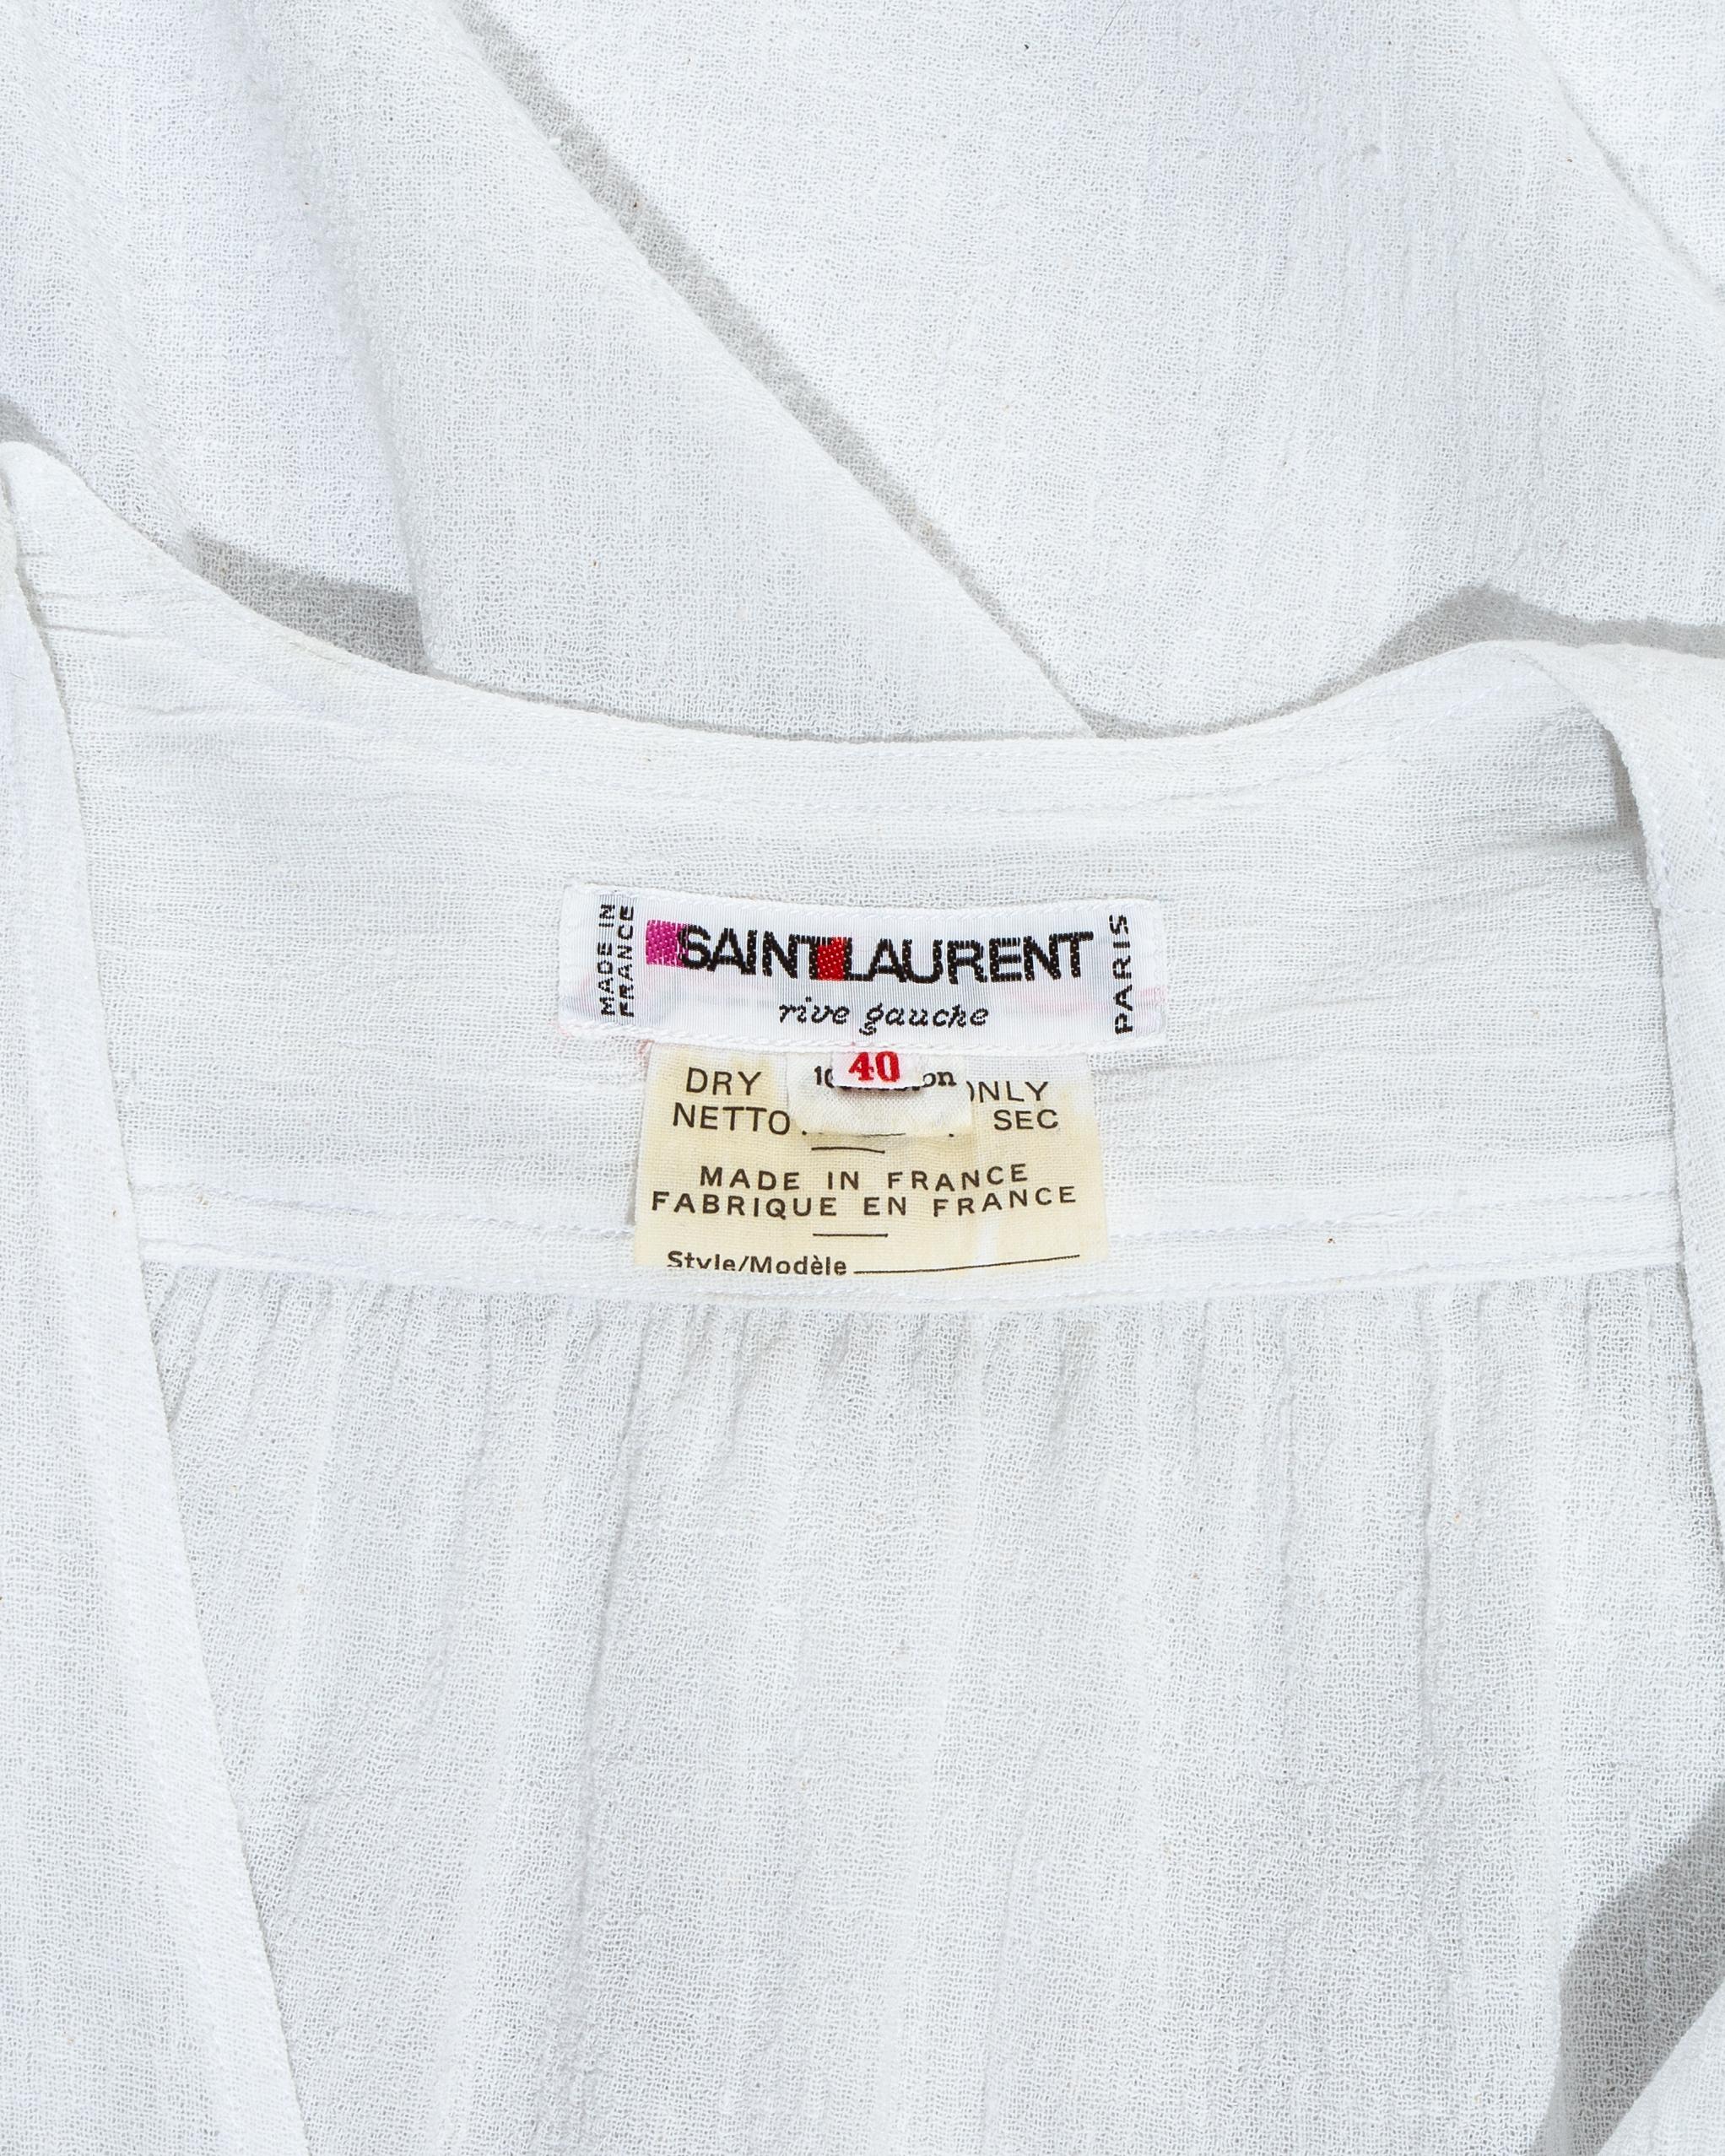 Women's Yves Saint Laurent white cotton caftan, c. 1970s